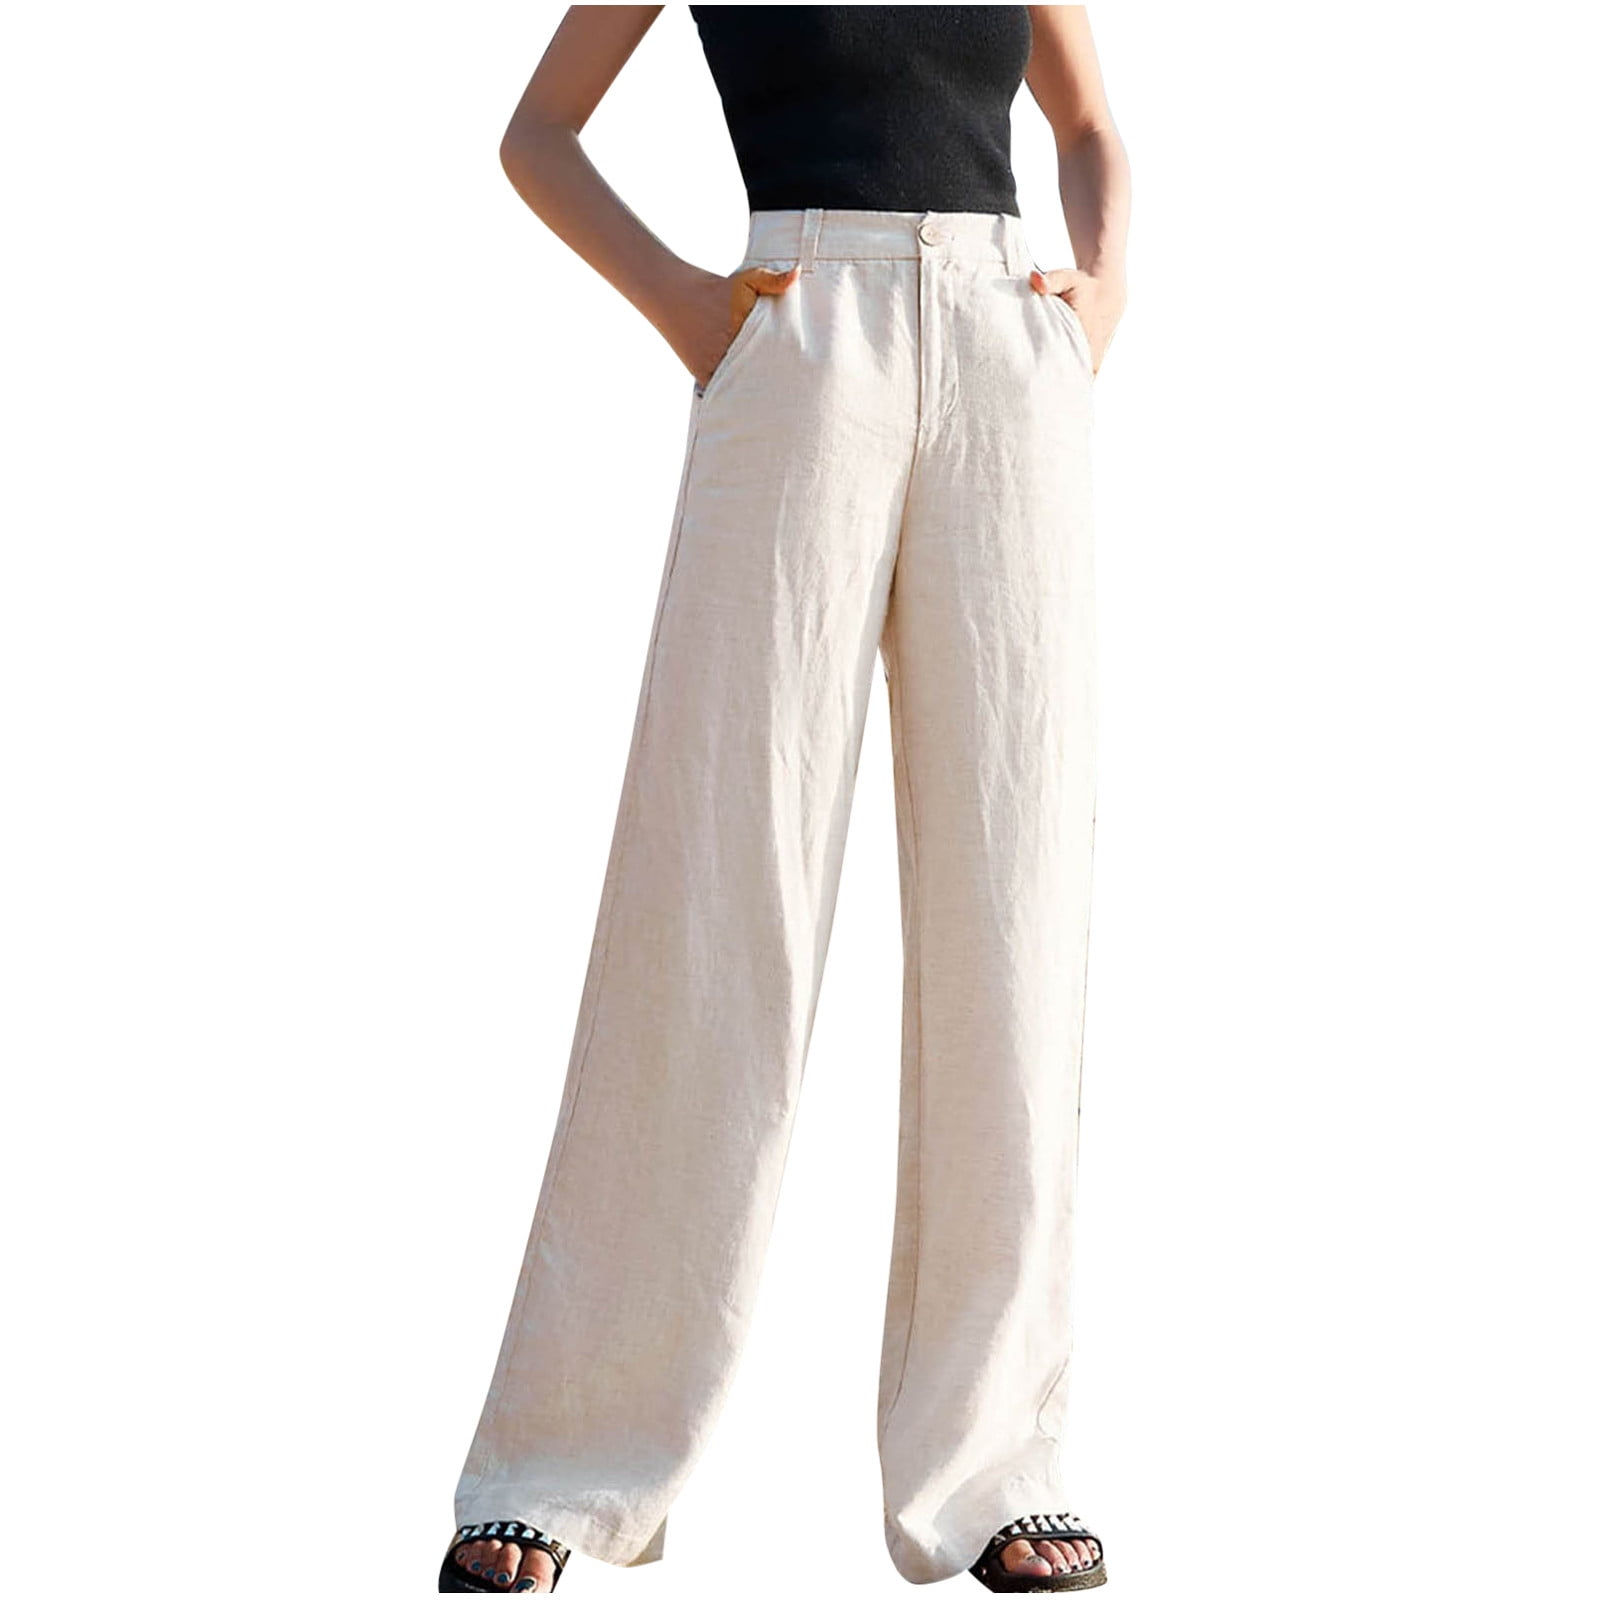 Ecqkame Women's Casual Cotton Linen Baggy Pants Clearance Fashion Women ...